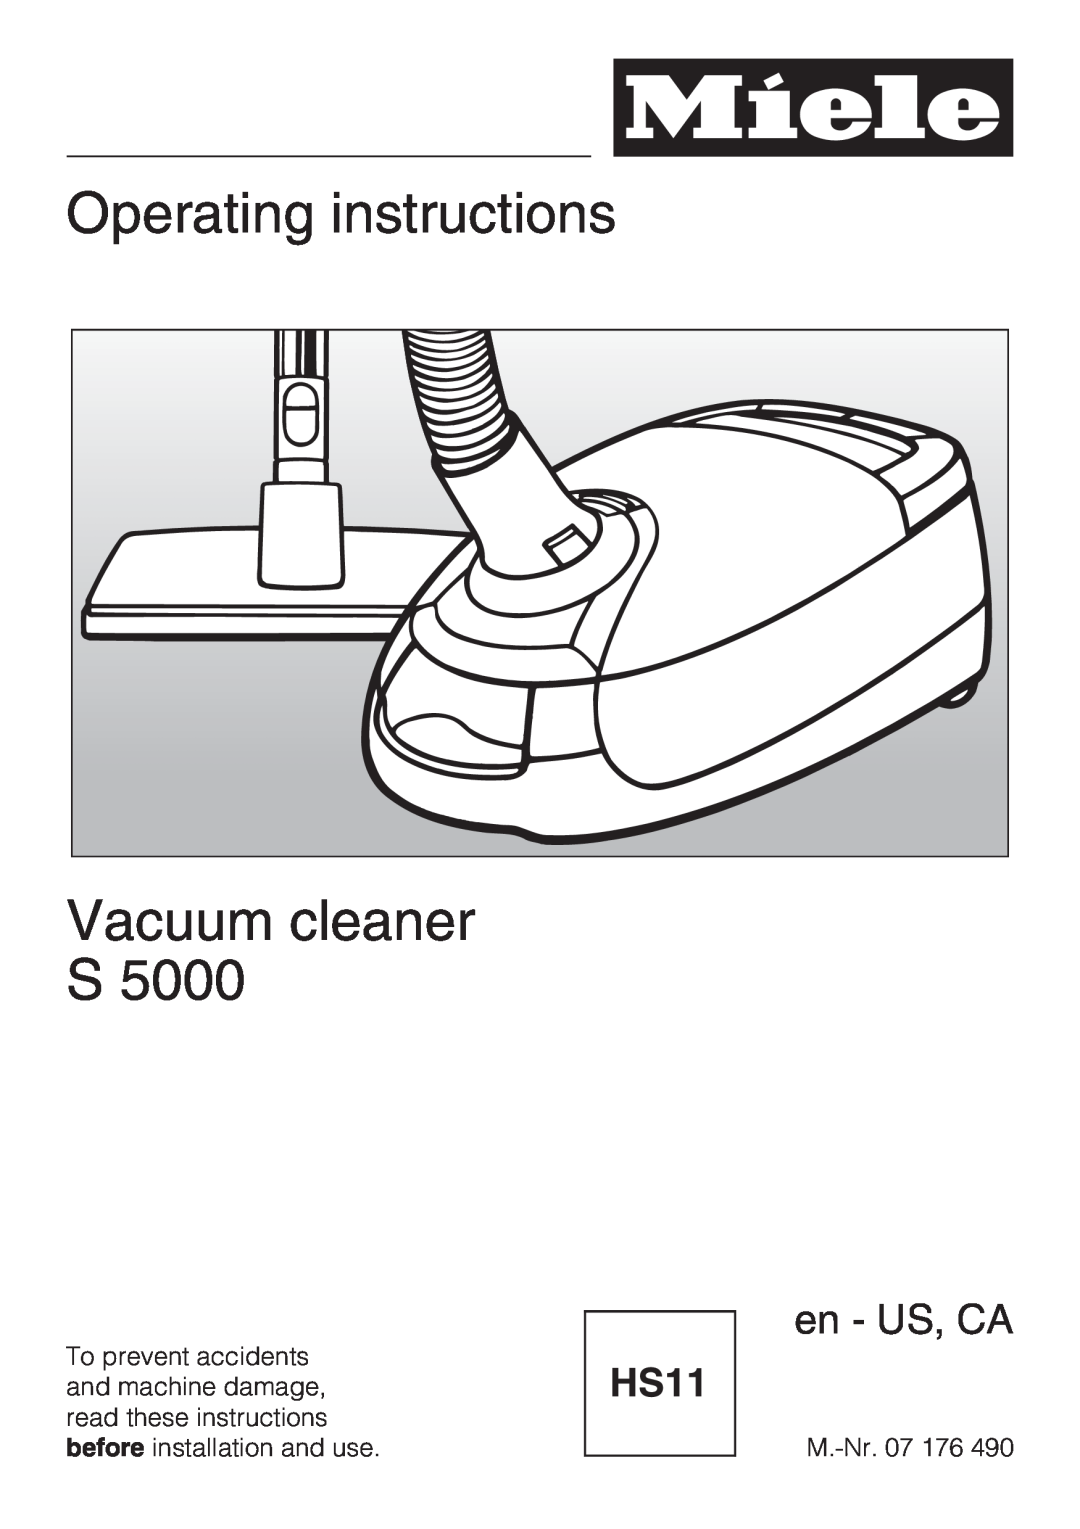 NEC S 5000 operating instructions Operating instructions Vacuum cleaner S, en - US, CA 